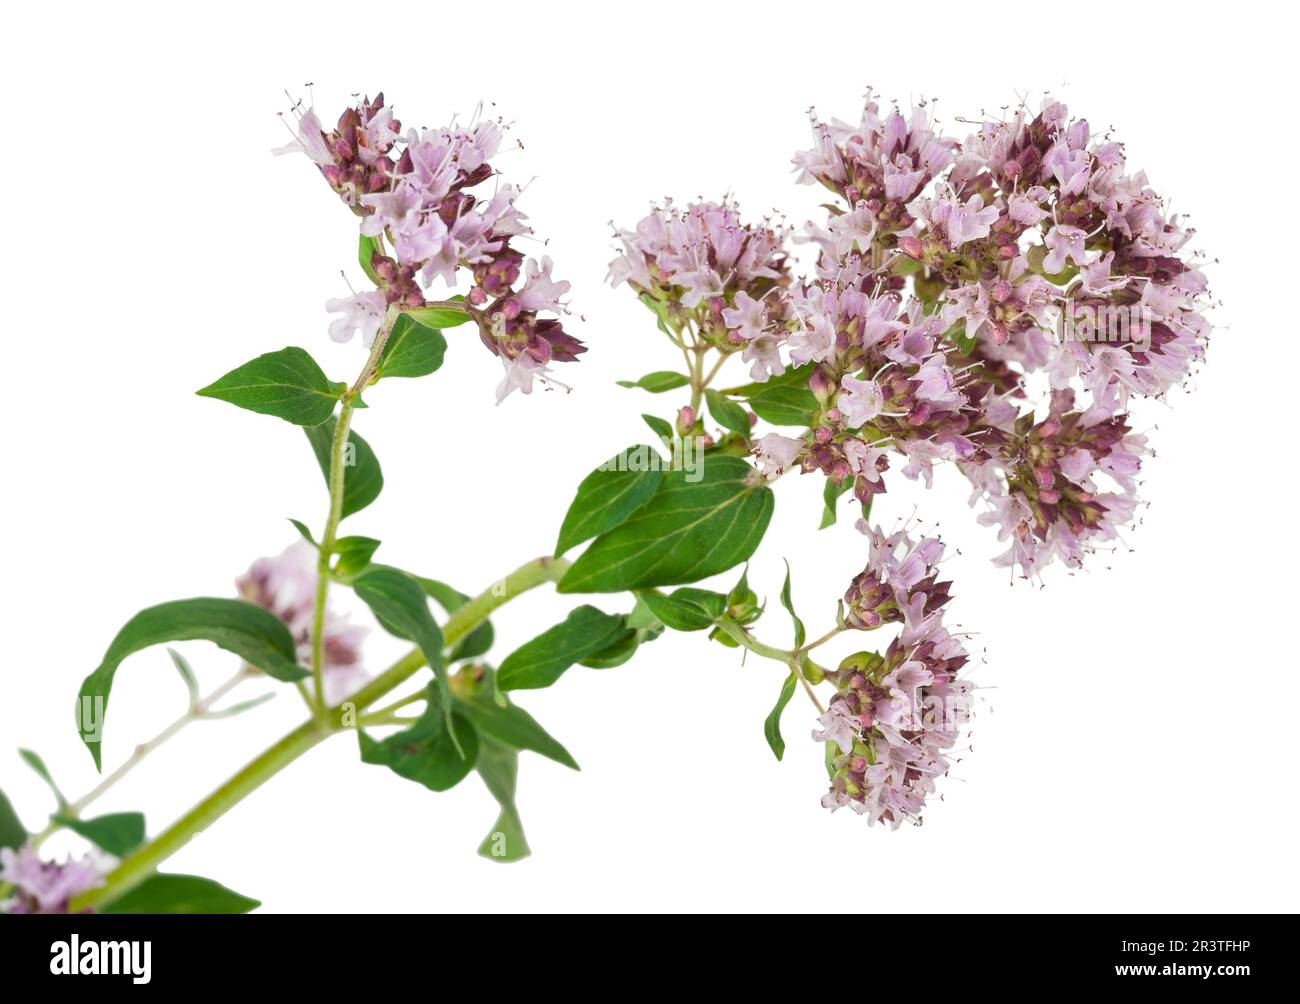 Medicinal plant: Origanum vulgare Stock Photo